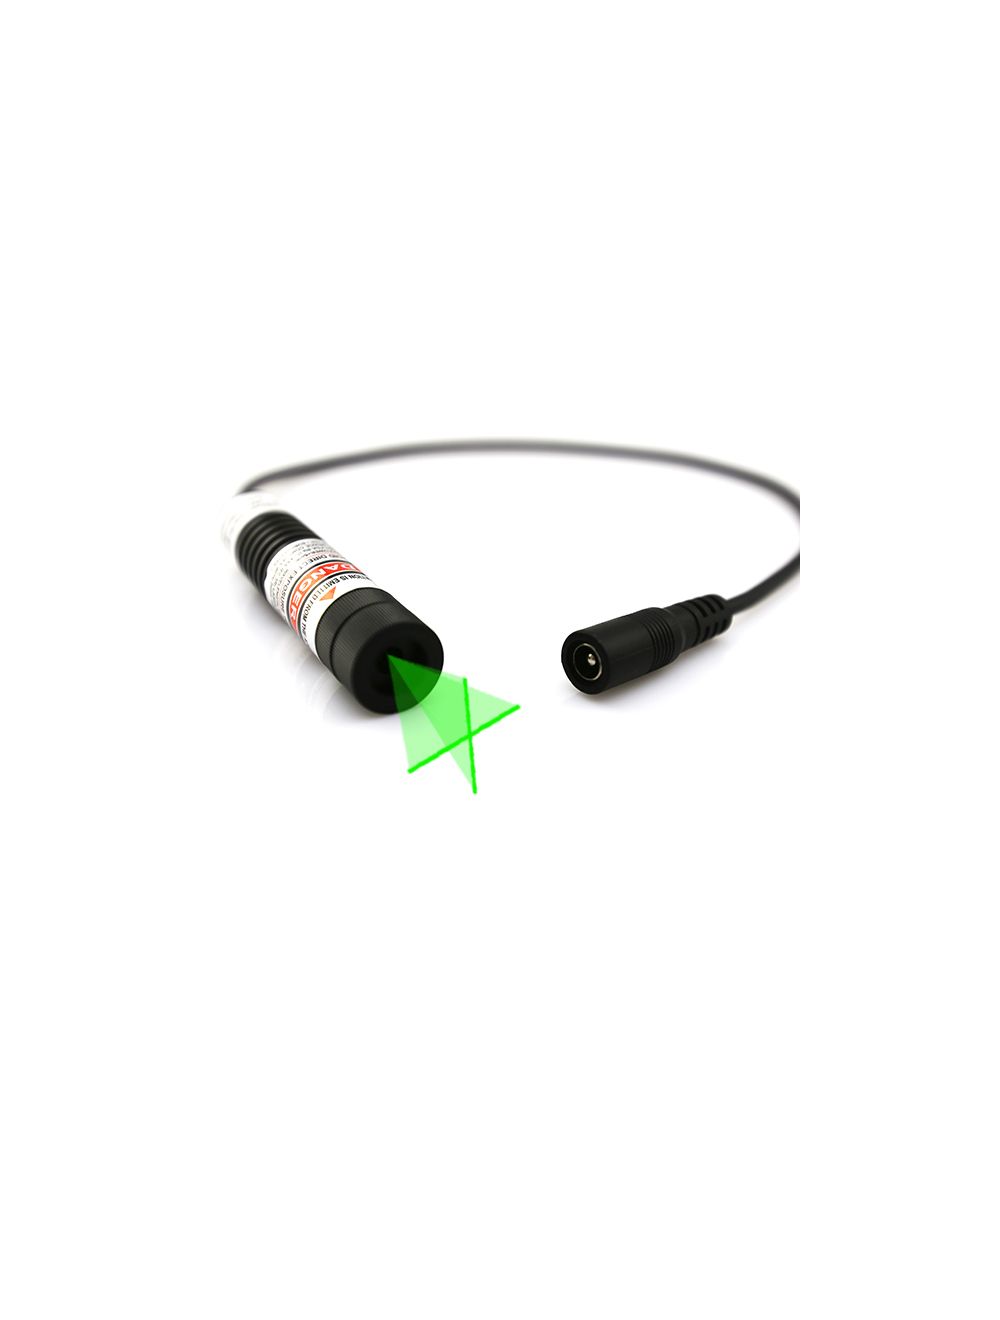 Focusable 515nm Green Laser Line Generator, Green Laser Diode